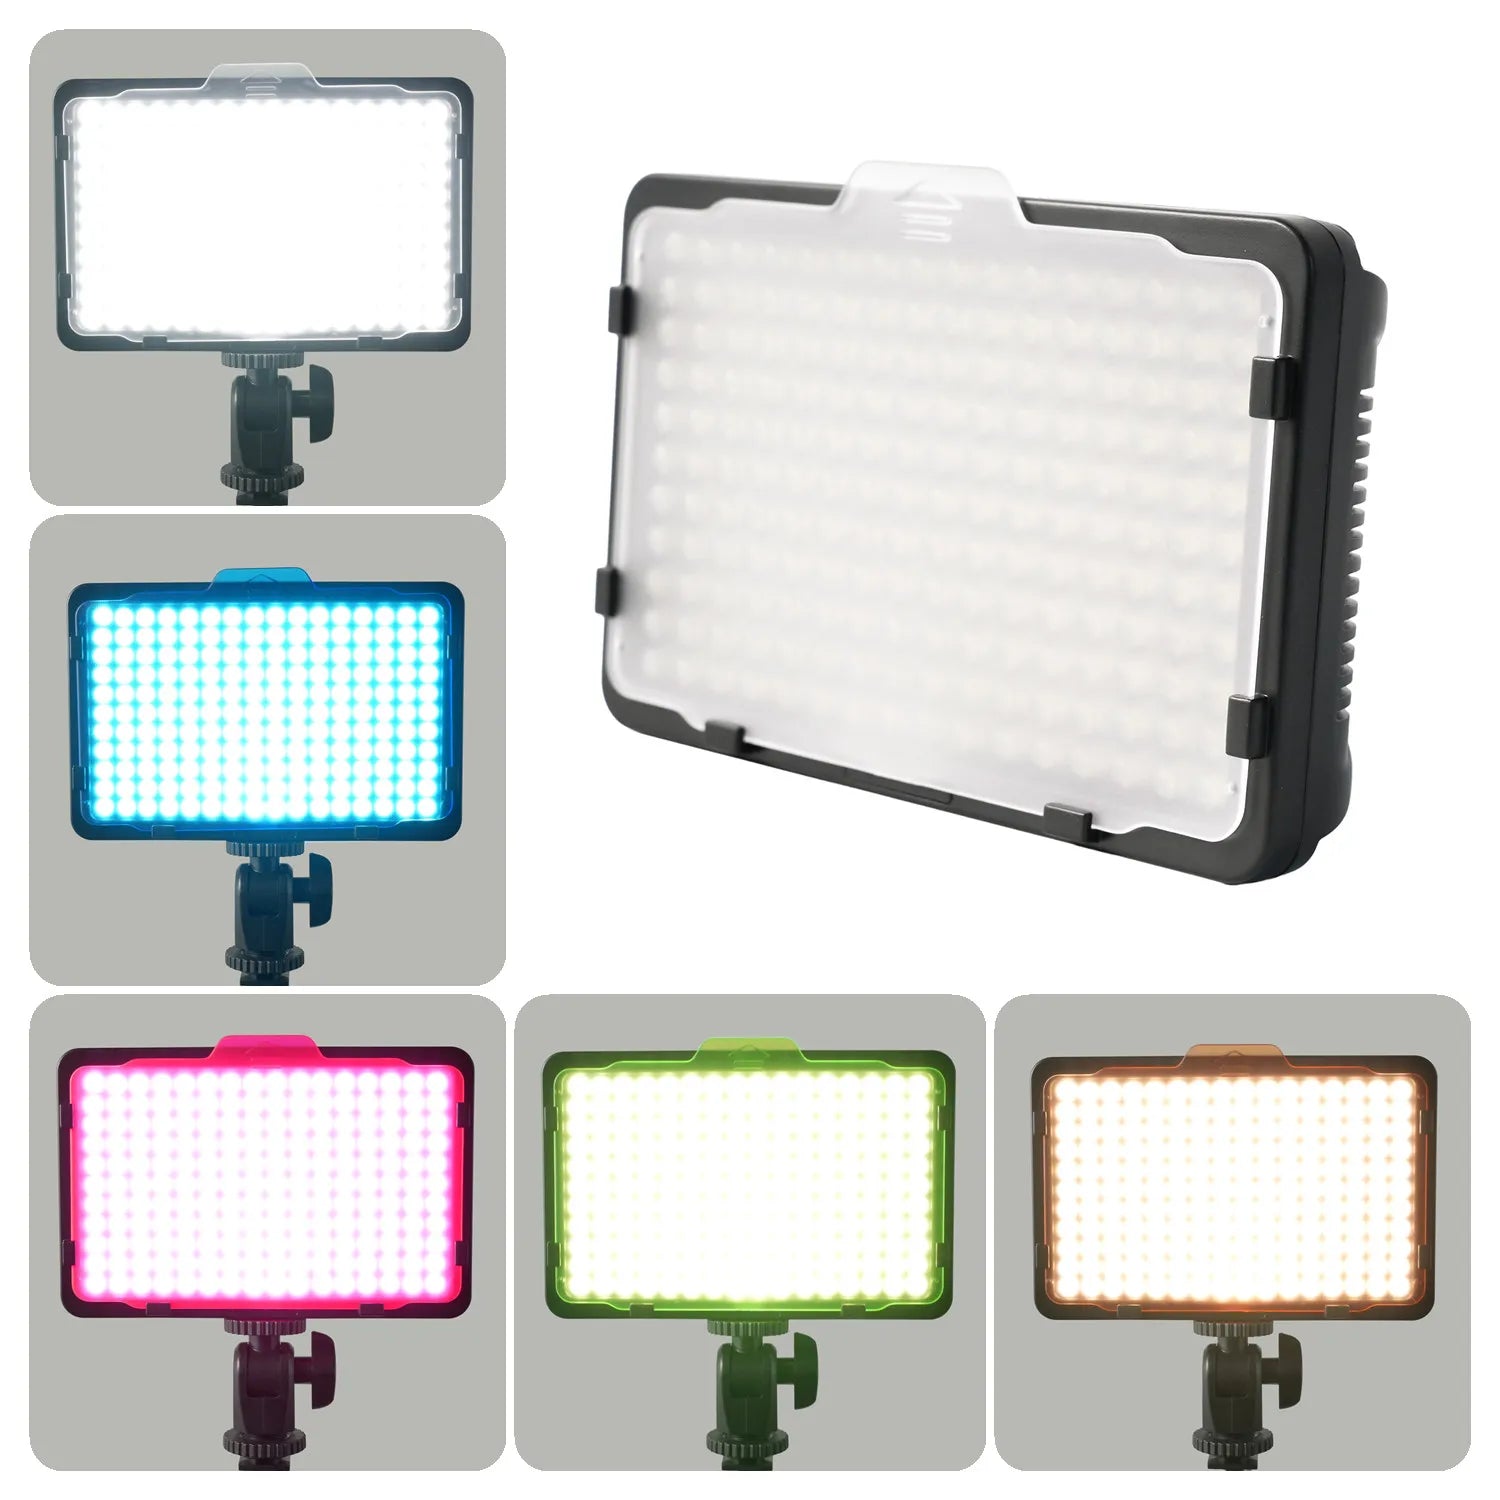 Portable Bi-Color LED Video Light Panel with Adjustable Color Temperature